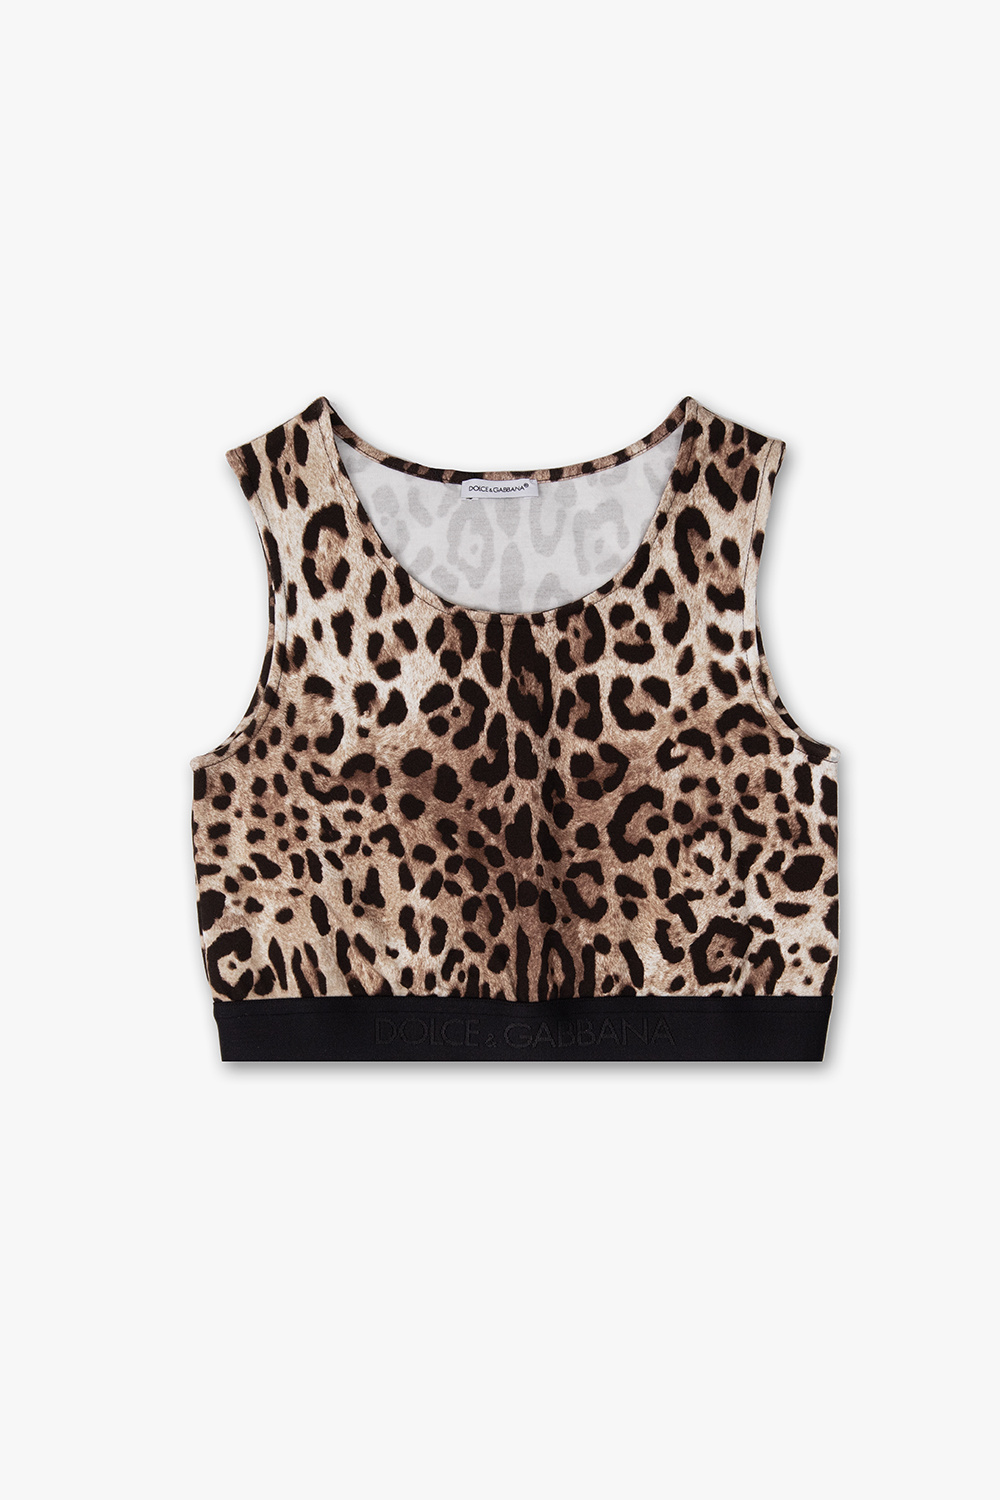 Dolce & Gabbana Kids 2 pack tank top Grey Top with animal pattern